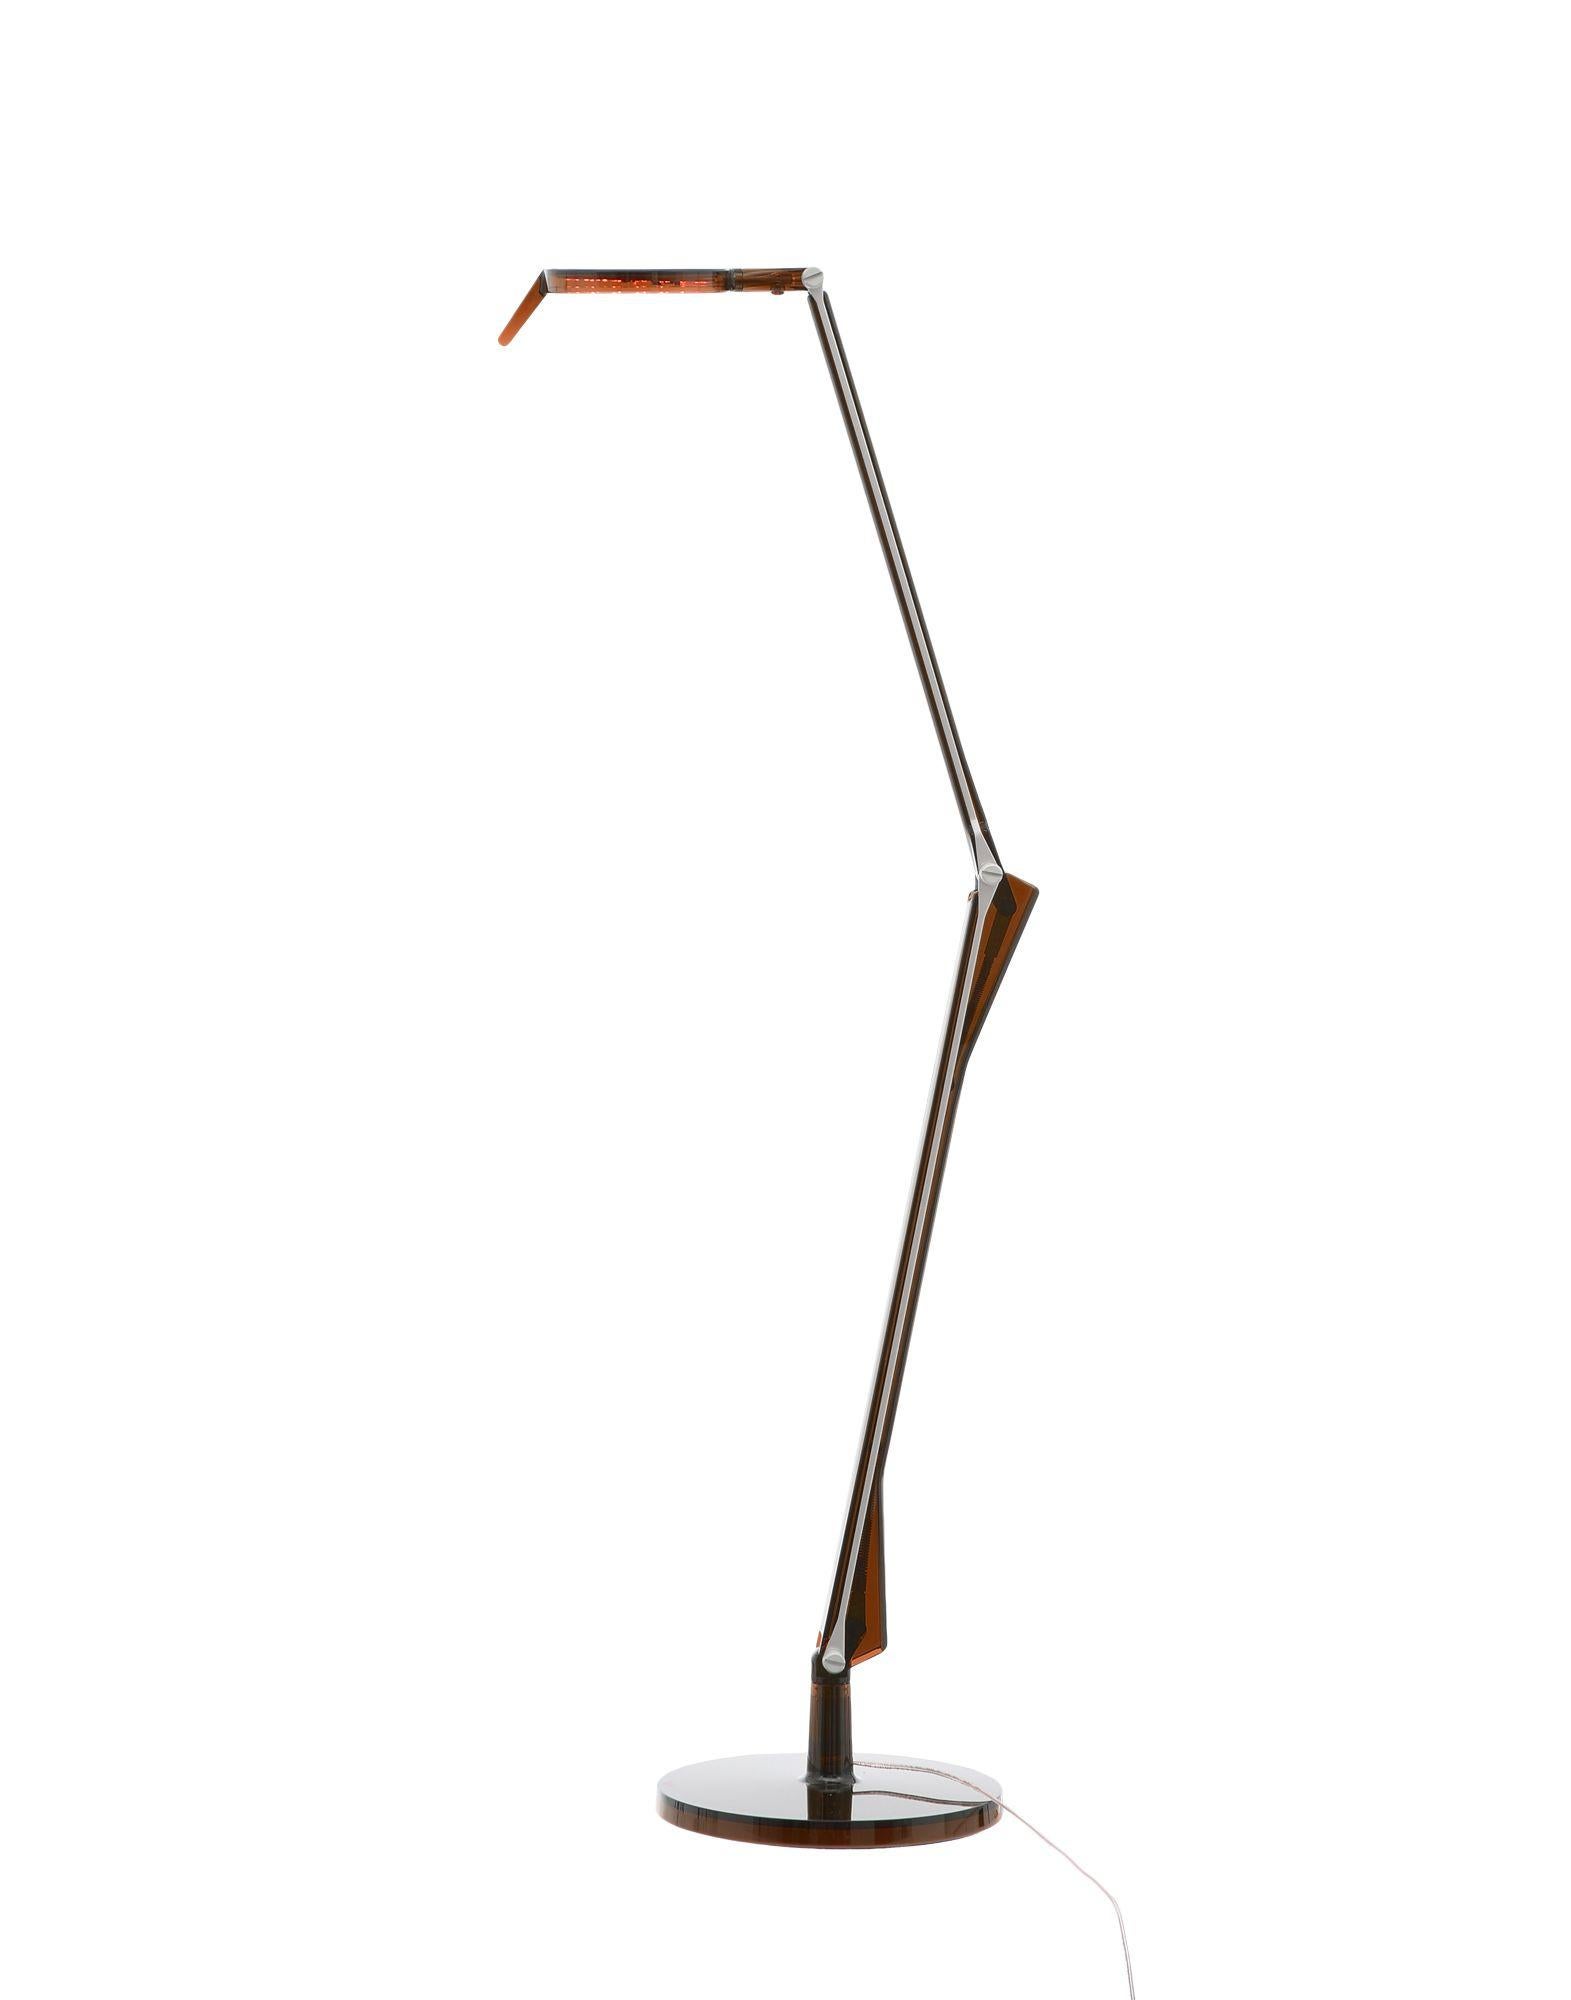 Italian Kartell Aledin Dec Desk Lamp in Amber by Alberto e Francesco Meda For Sale